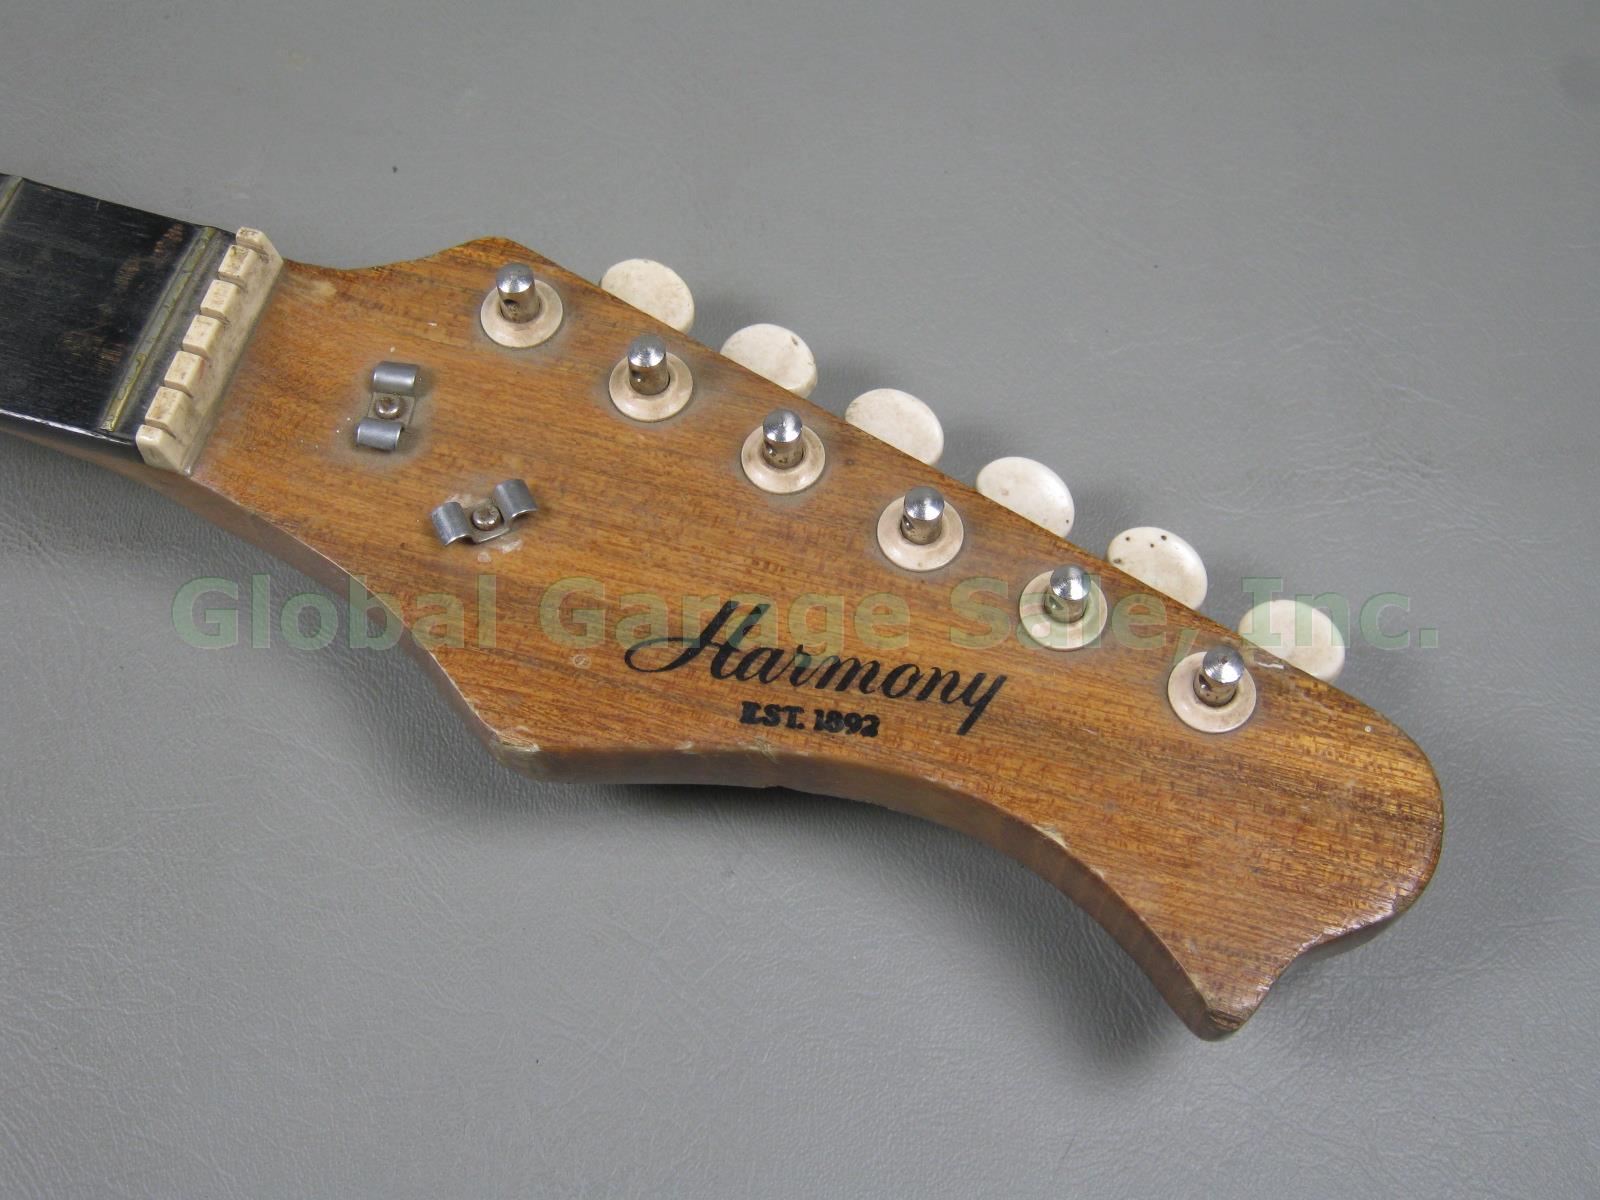 Vtg Harmony Electric Guitar MIJ? Japan? Lawsuit Era? As-Is For Parts Or Repair 4